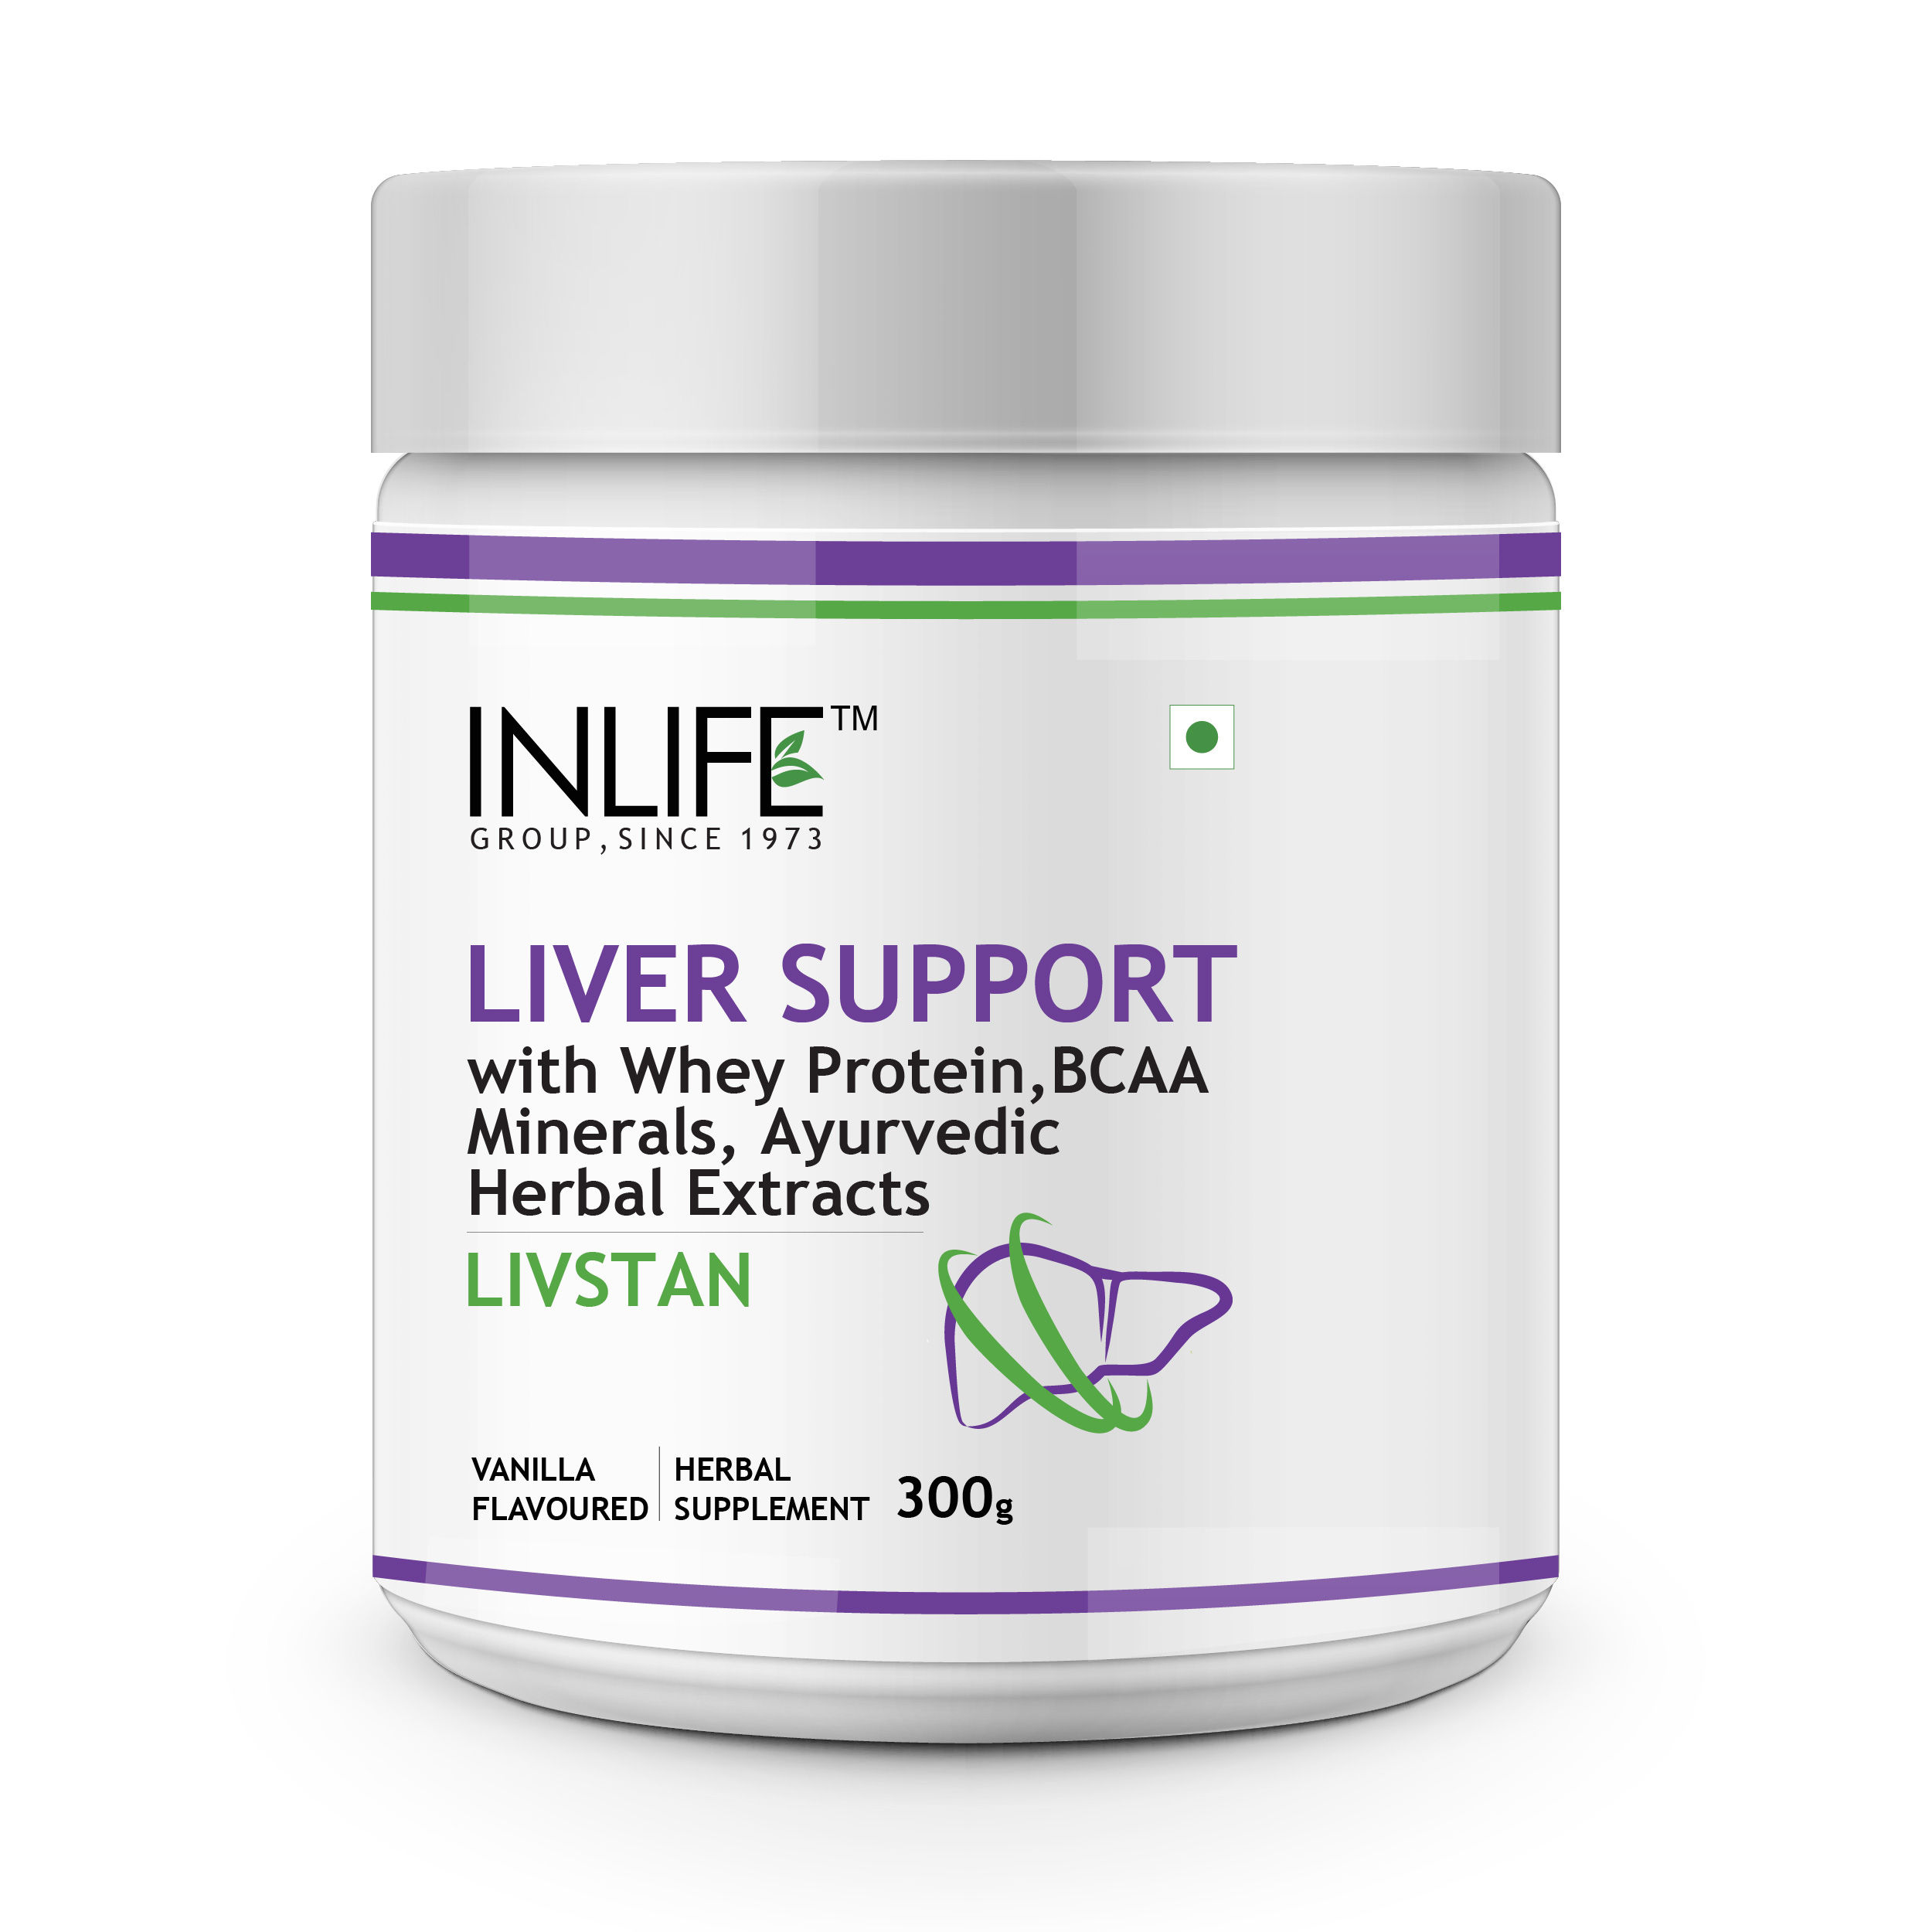 INLIFE Livstan Liver Support Supplement Whey Protein Powder & Ayurvedic Herbs, 300 grams (Vanilla)